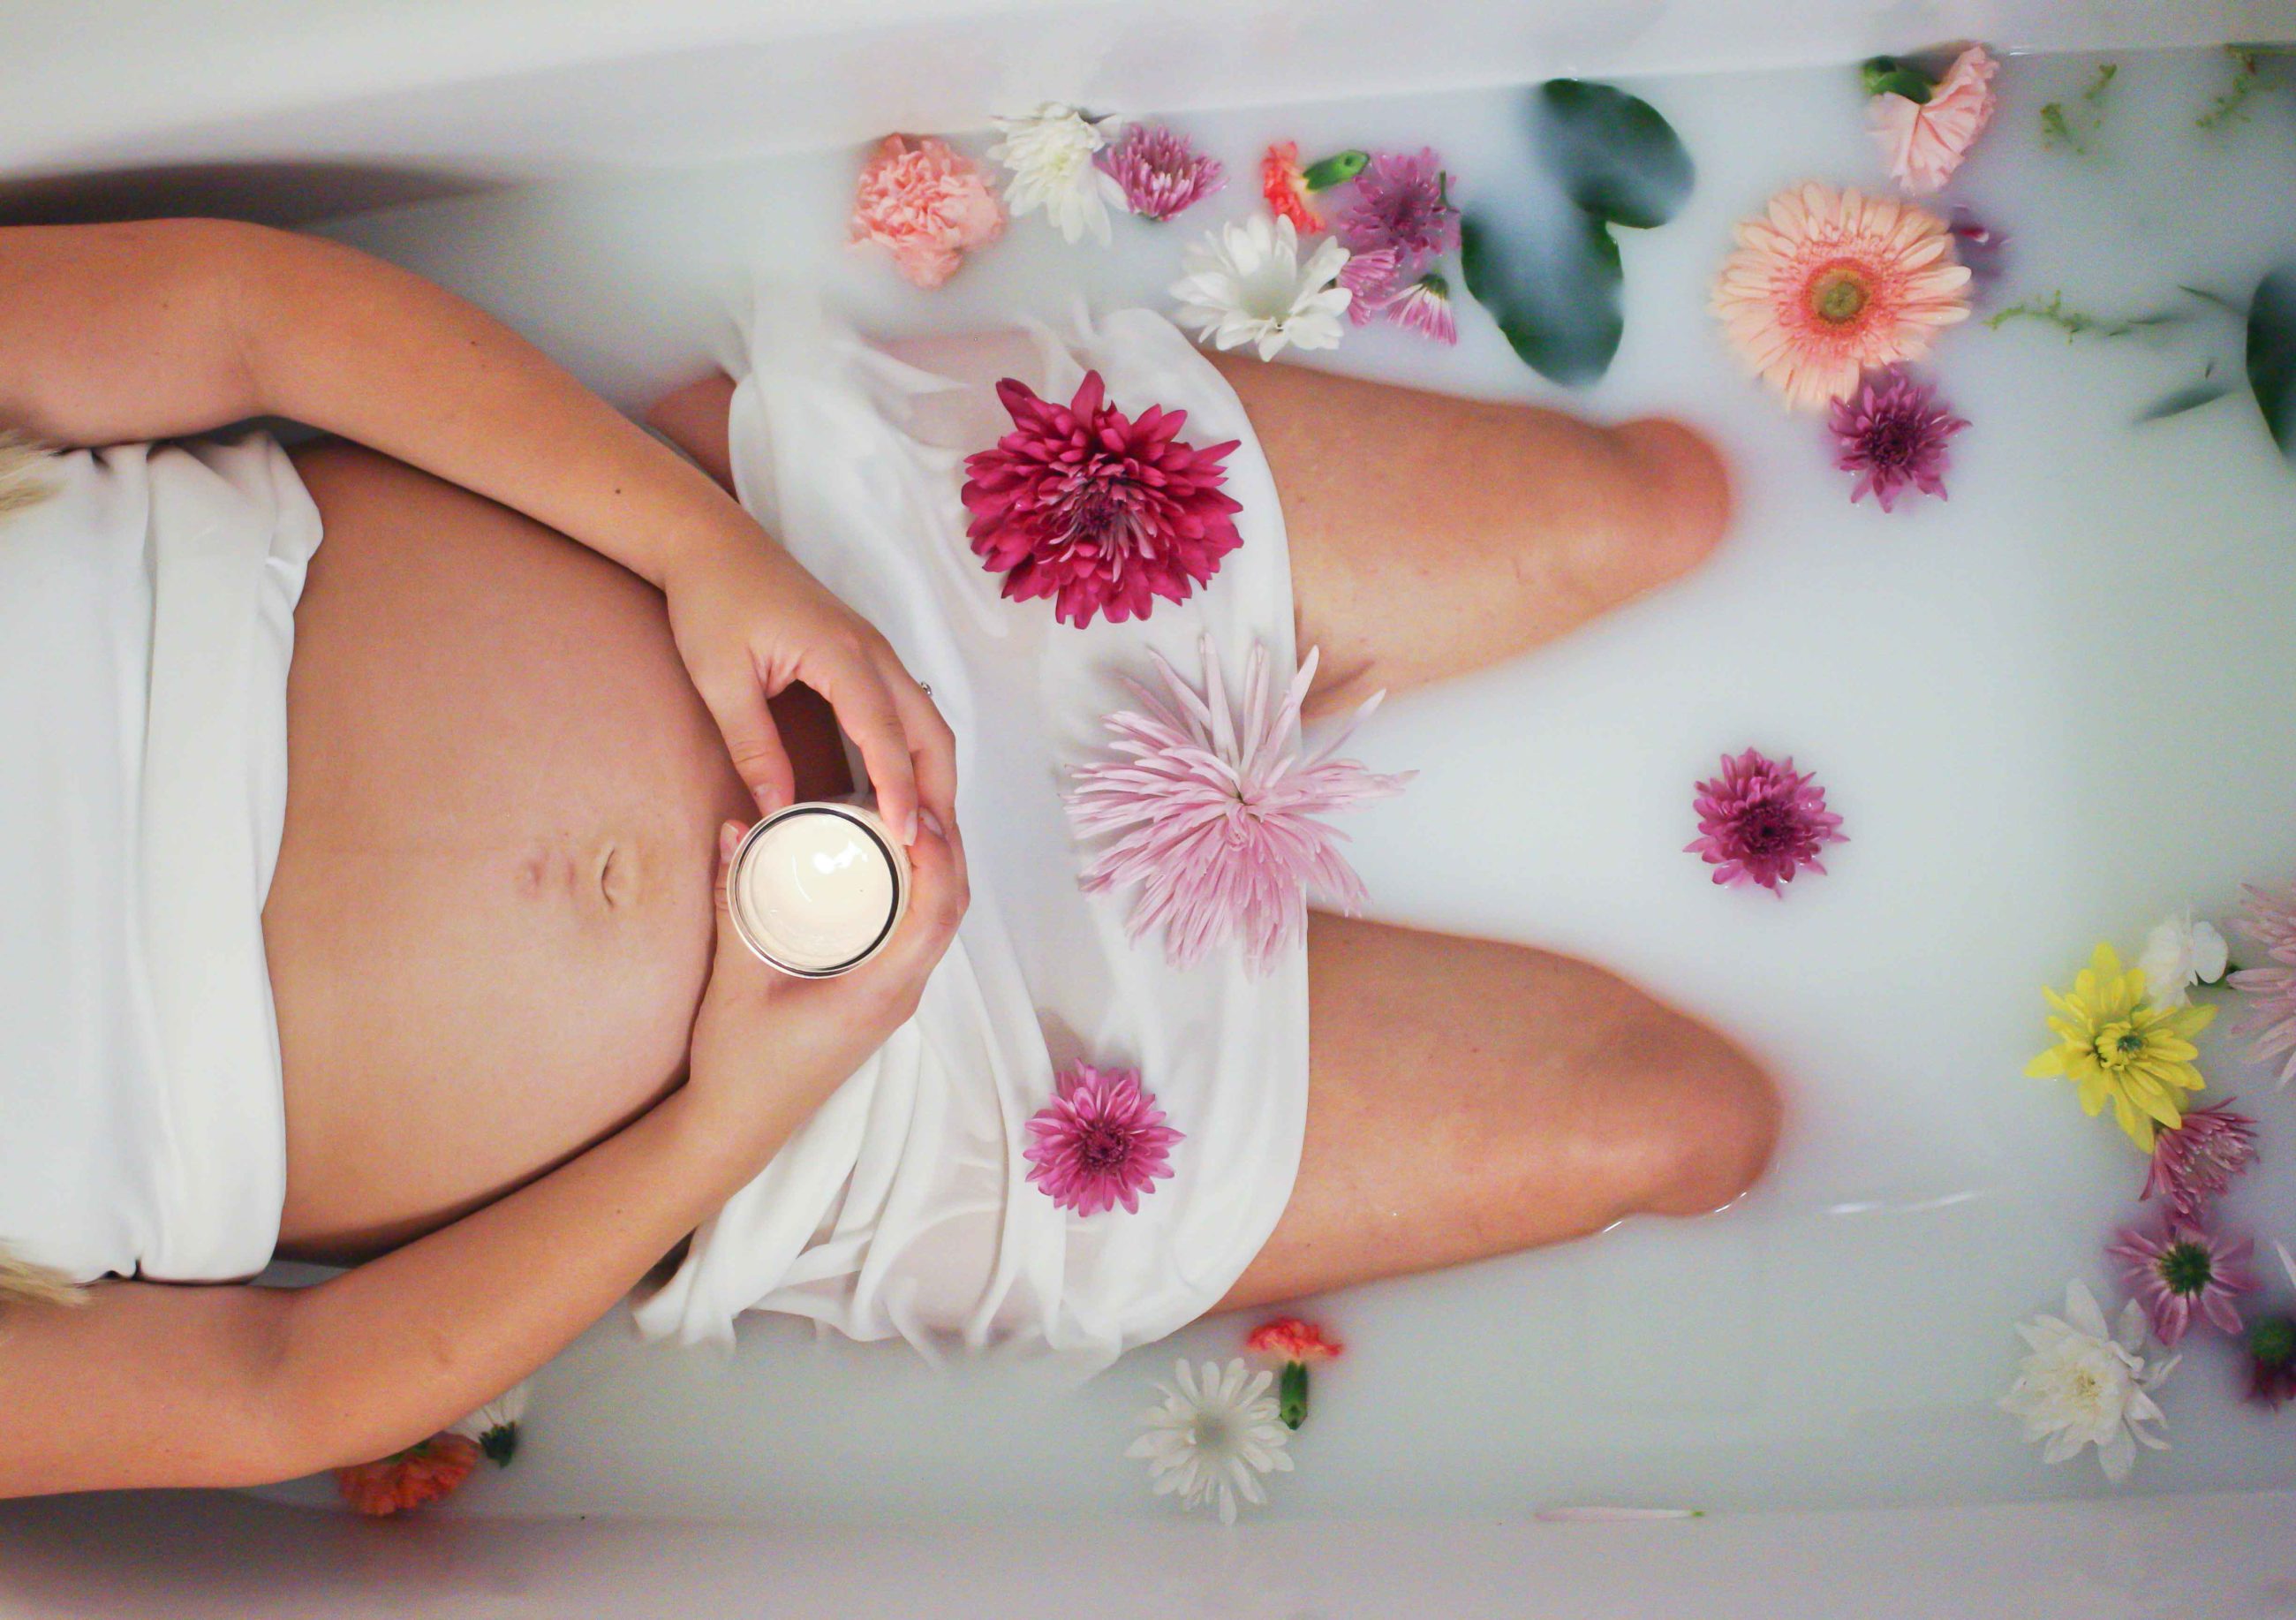 Femme enceinte dans son bain